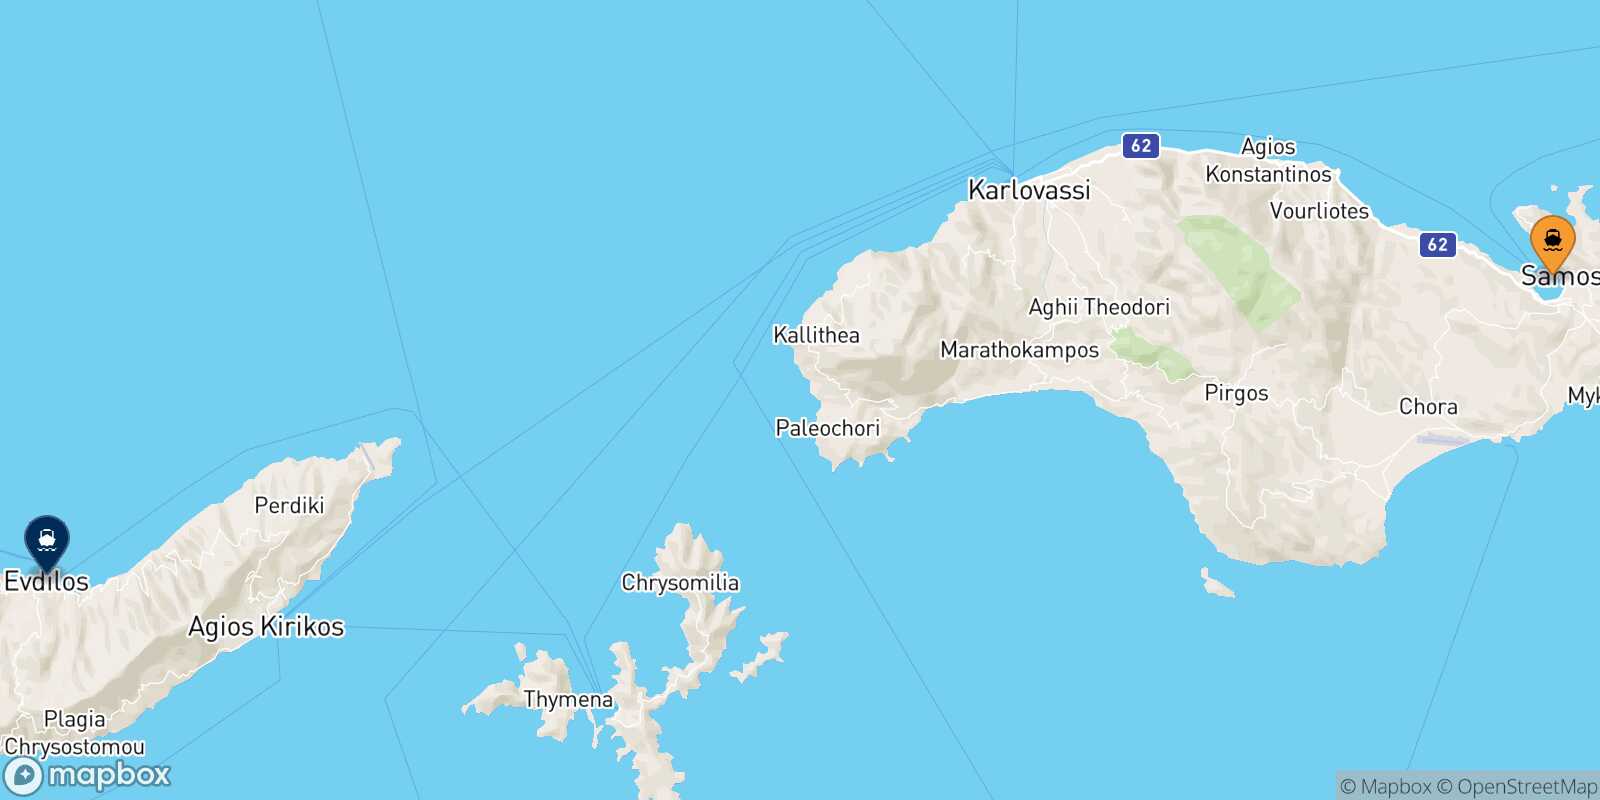 Vathi (Samos) Evdilos (Ikaria) route map